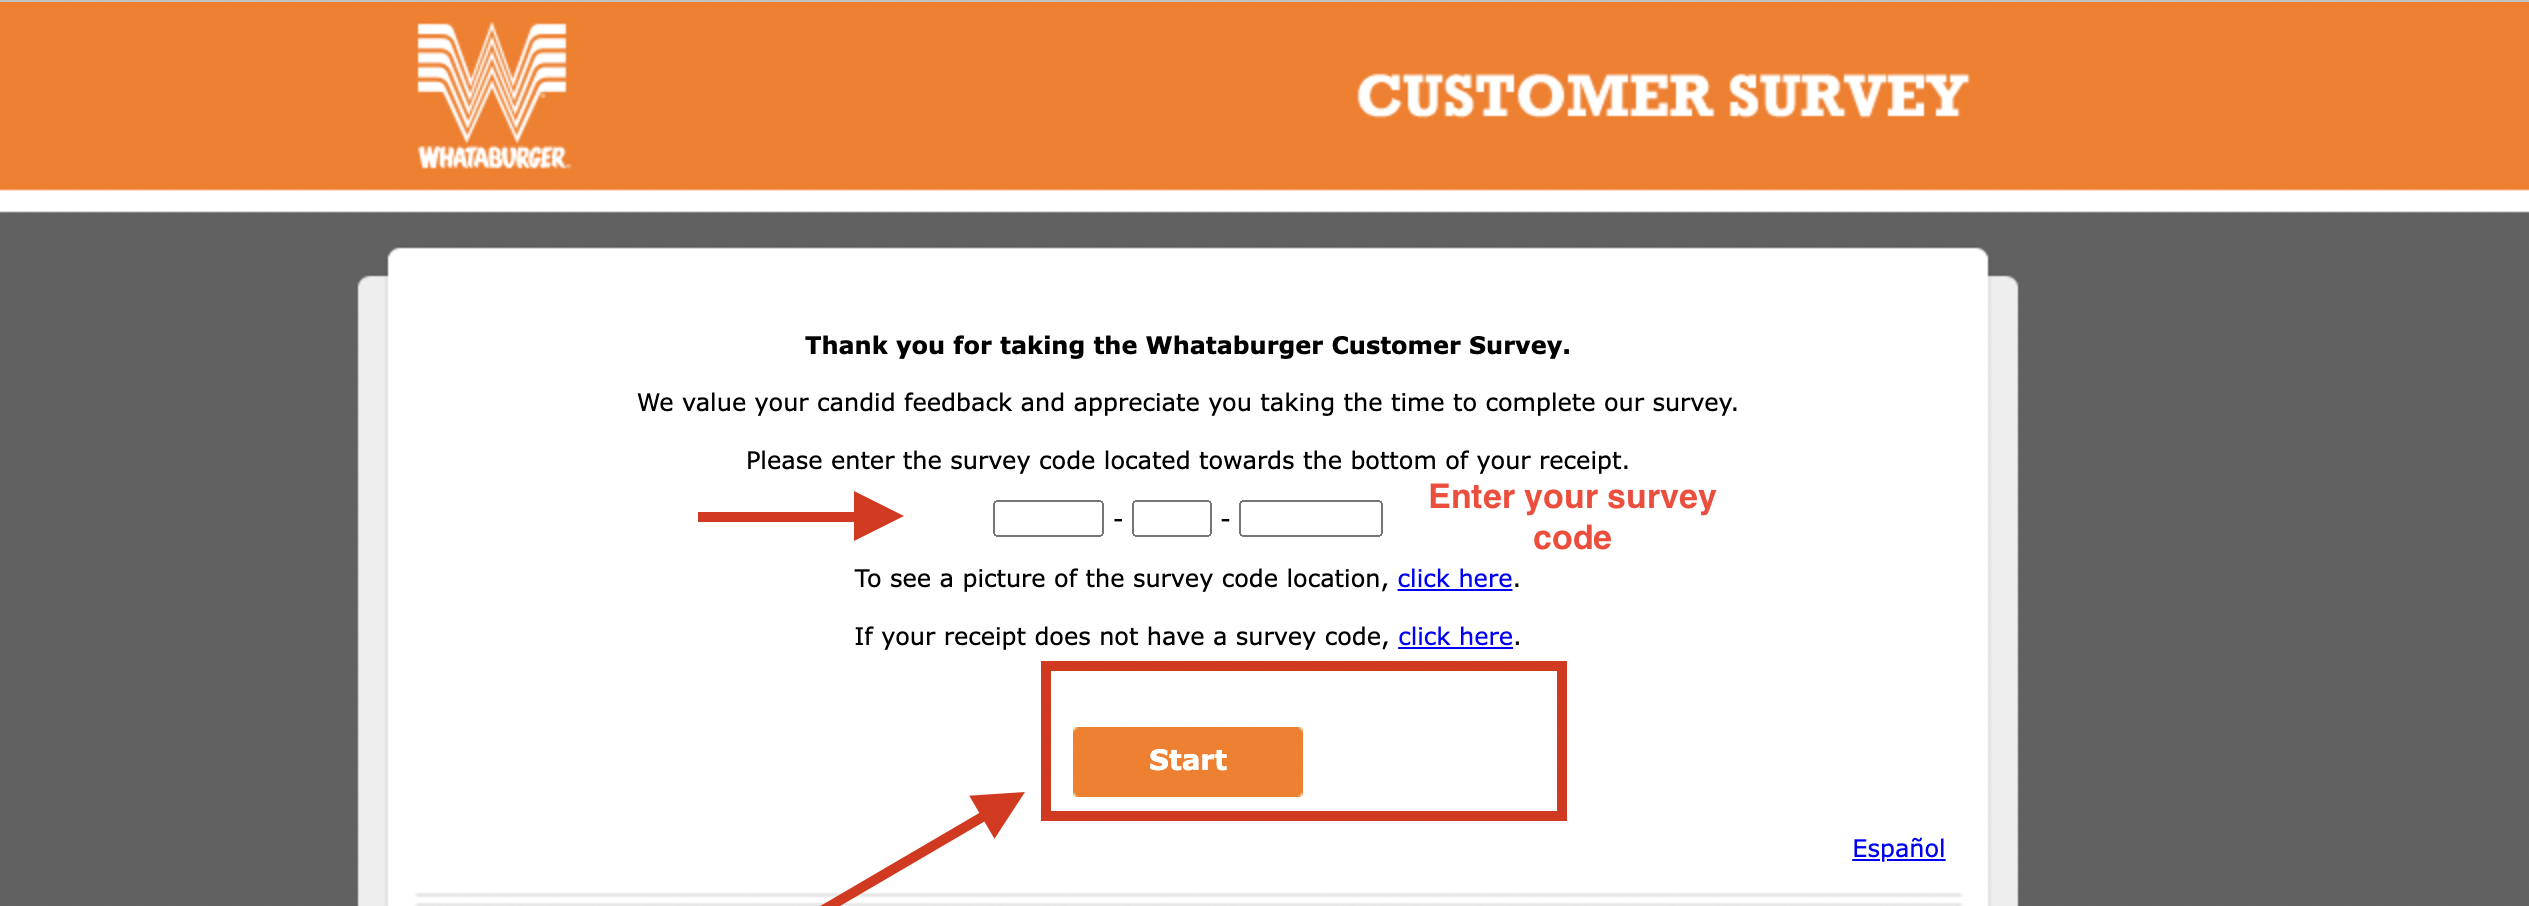 How to Take the Whataburger Survey